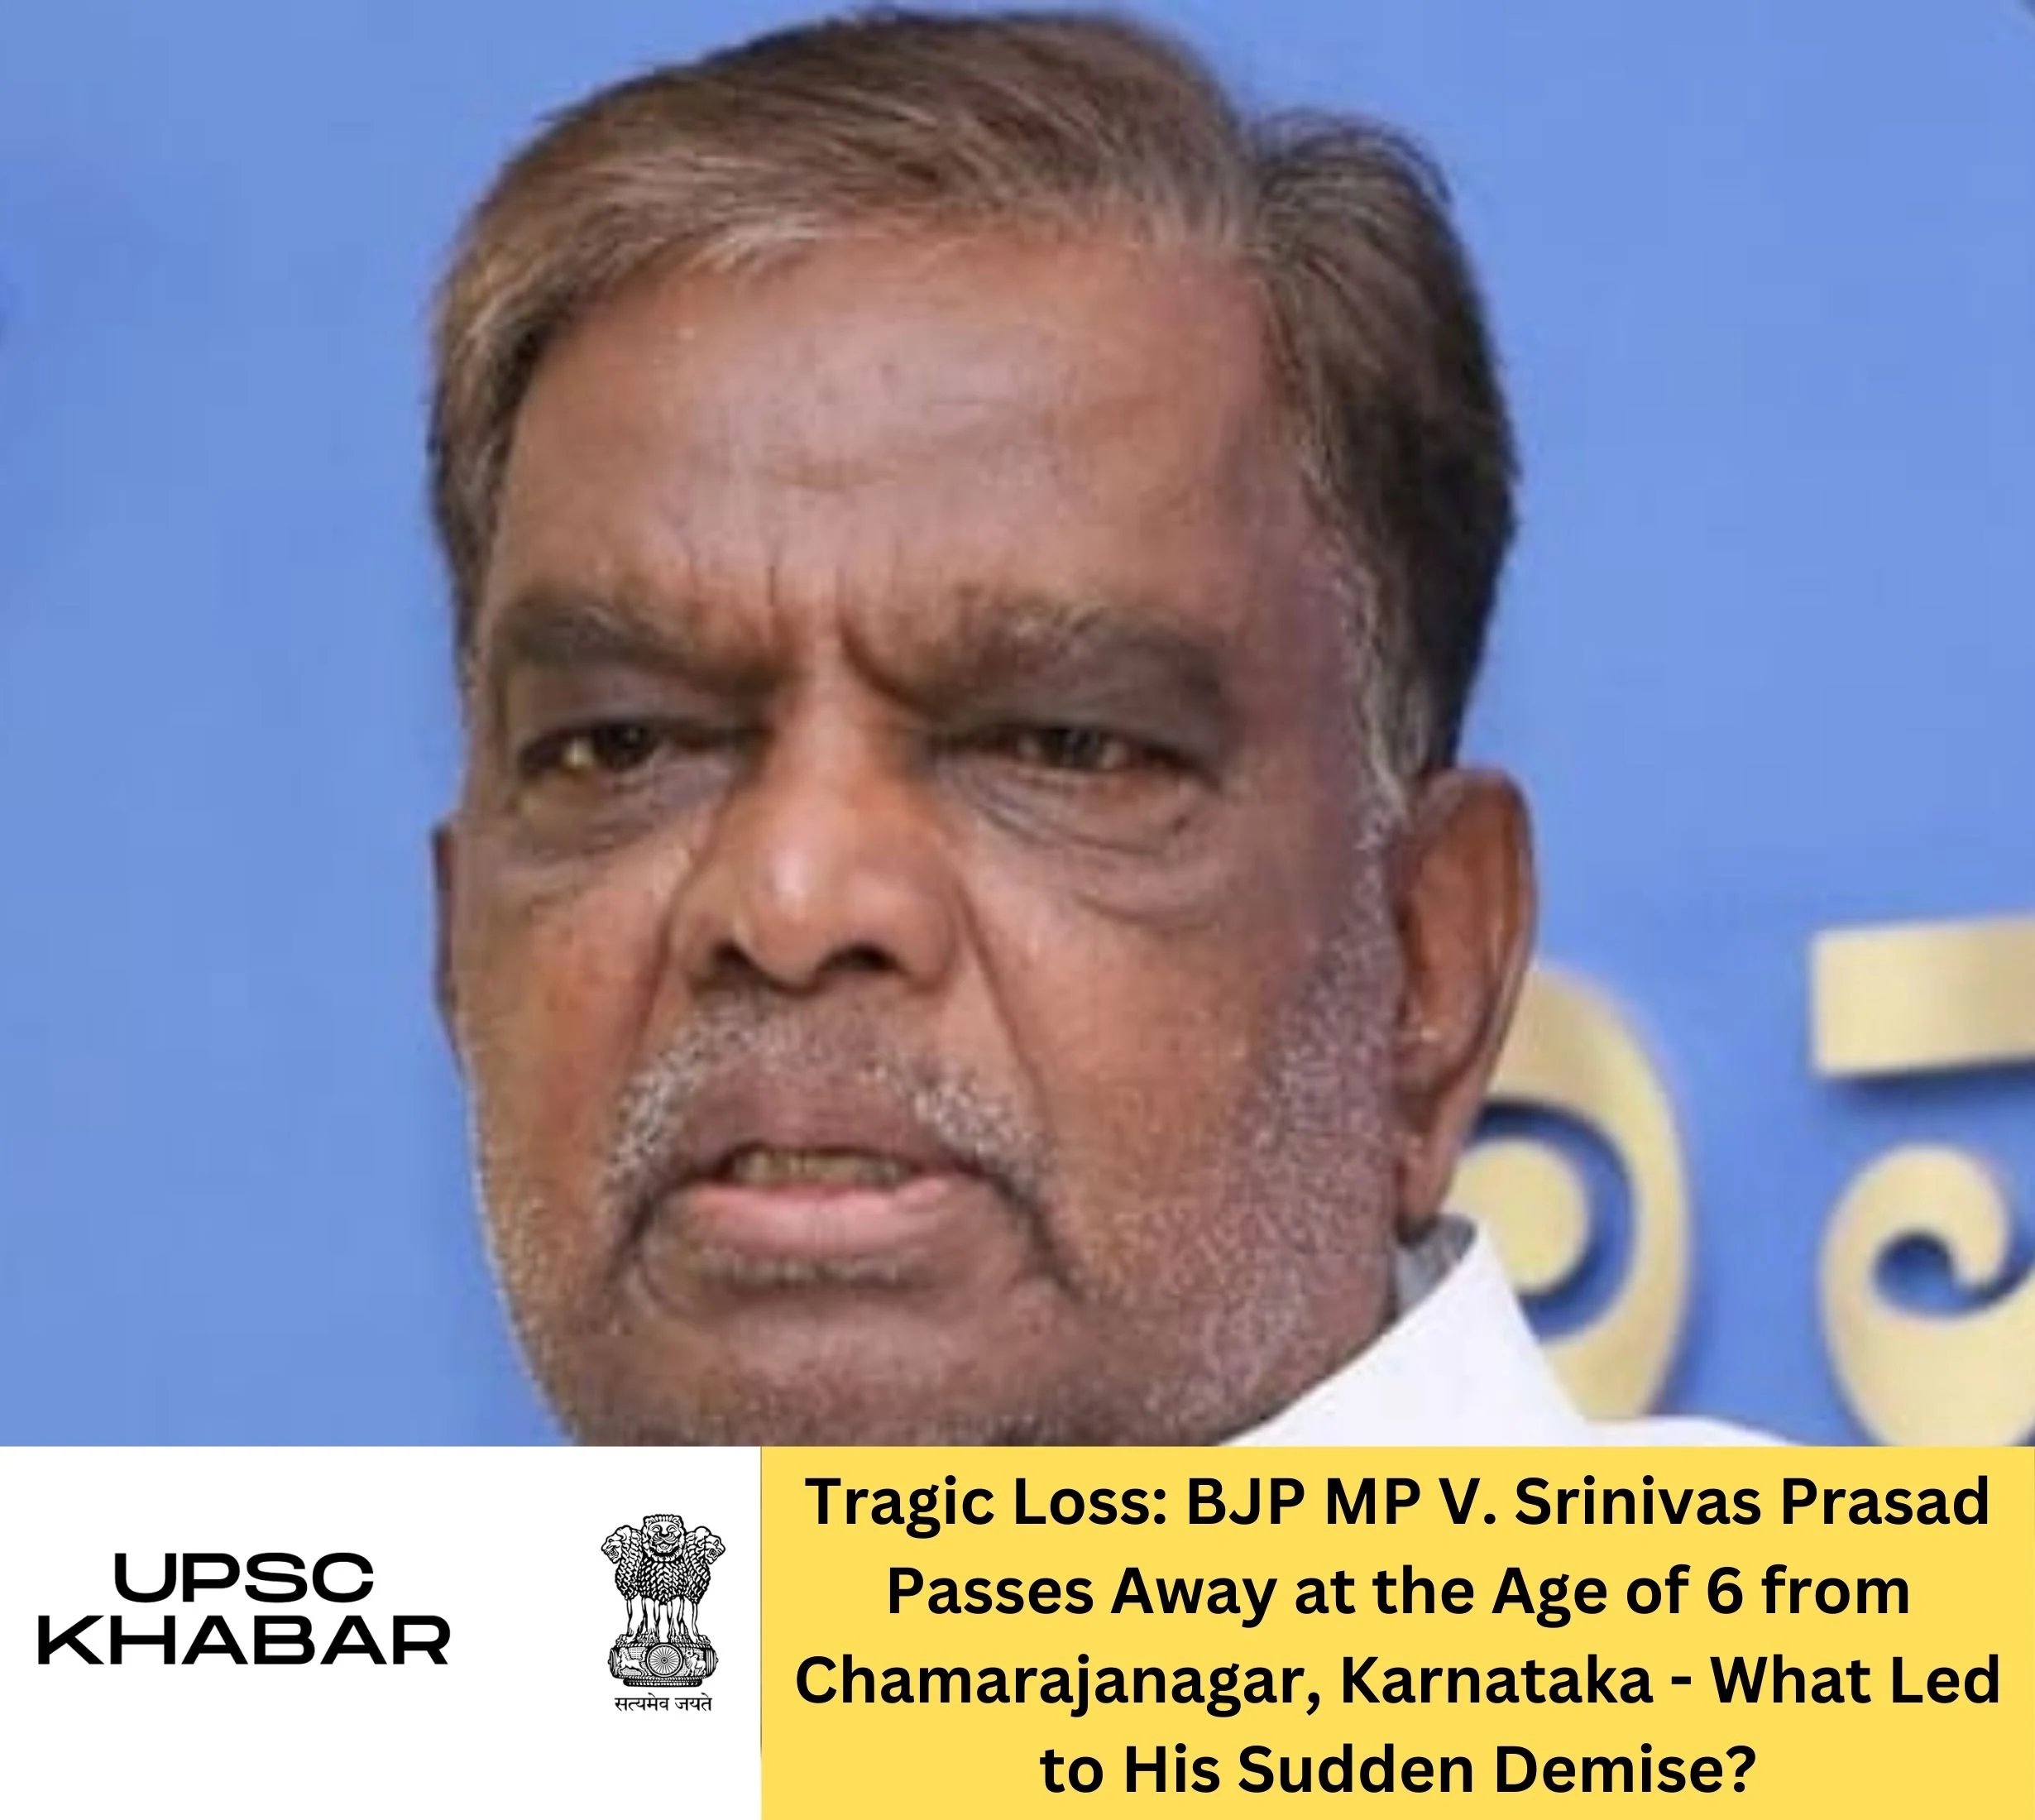 Tragic Loss: BJP MP V. Srinivas Prasad Passes Away at the Age of 6 from Chamarajanagar, Karnataka - What Led to His Sudden Demise?